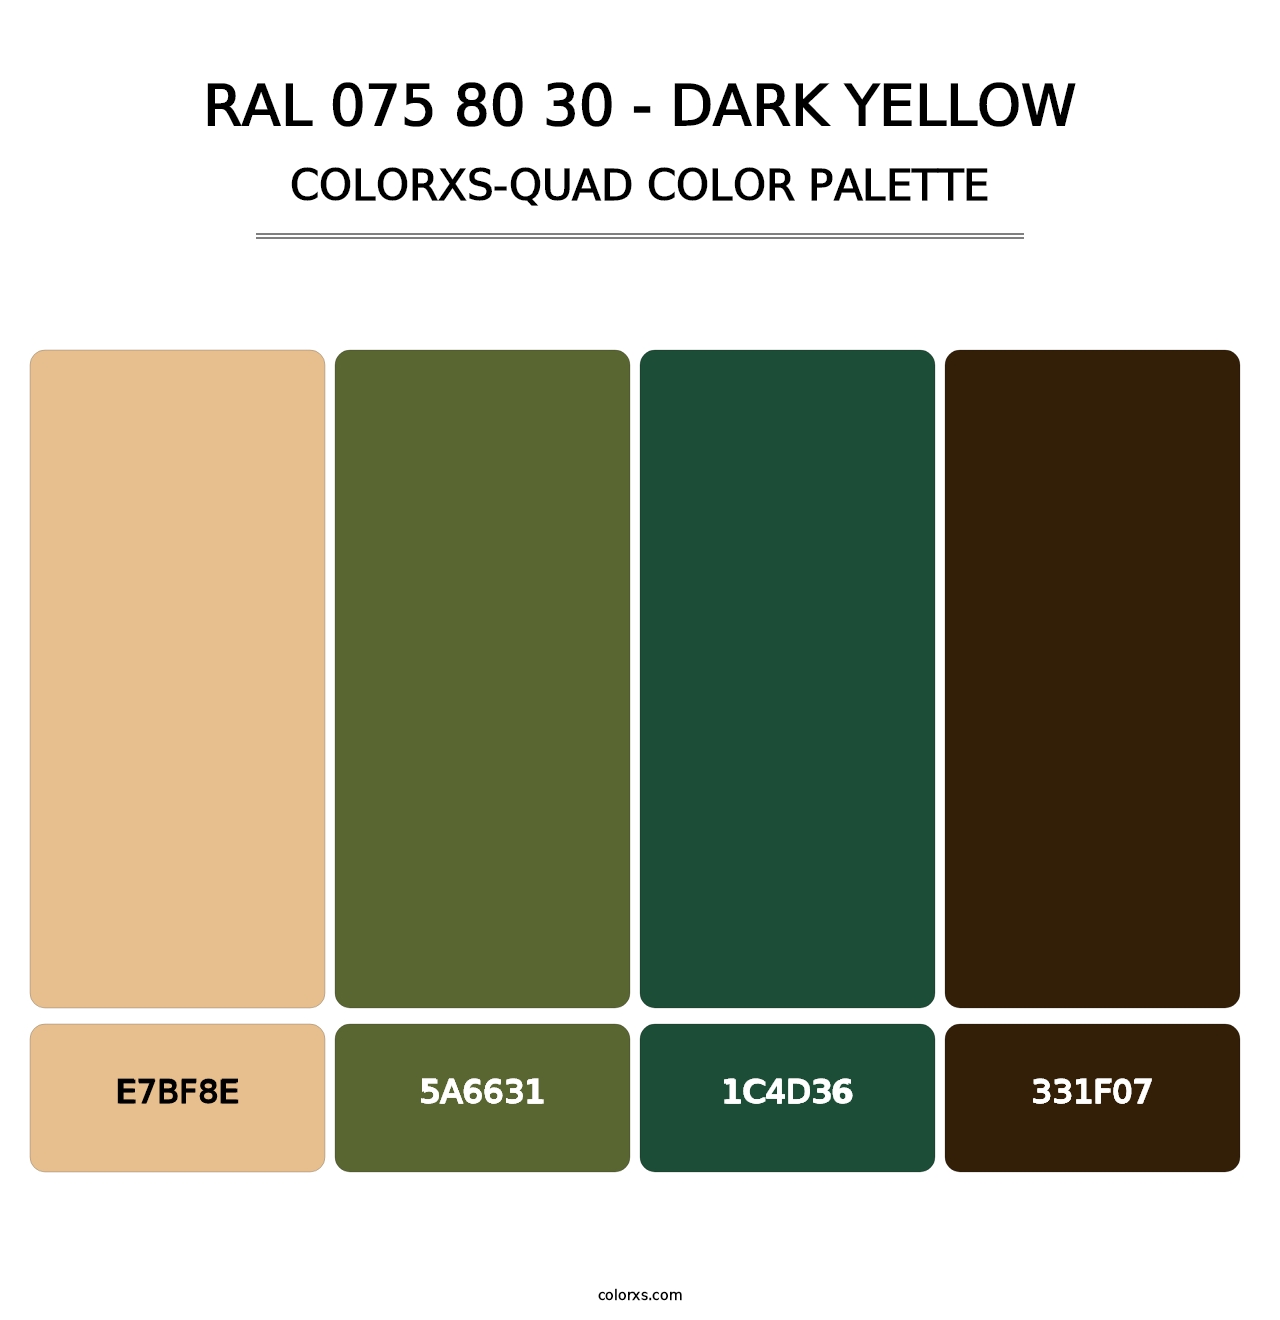 RAL 075 80 30 - Dark Yellow - Colorxs Quad Palette